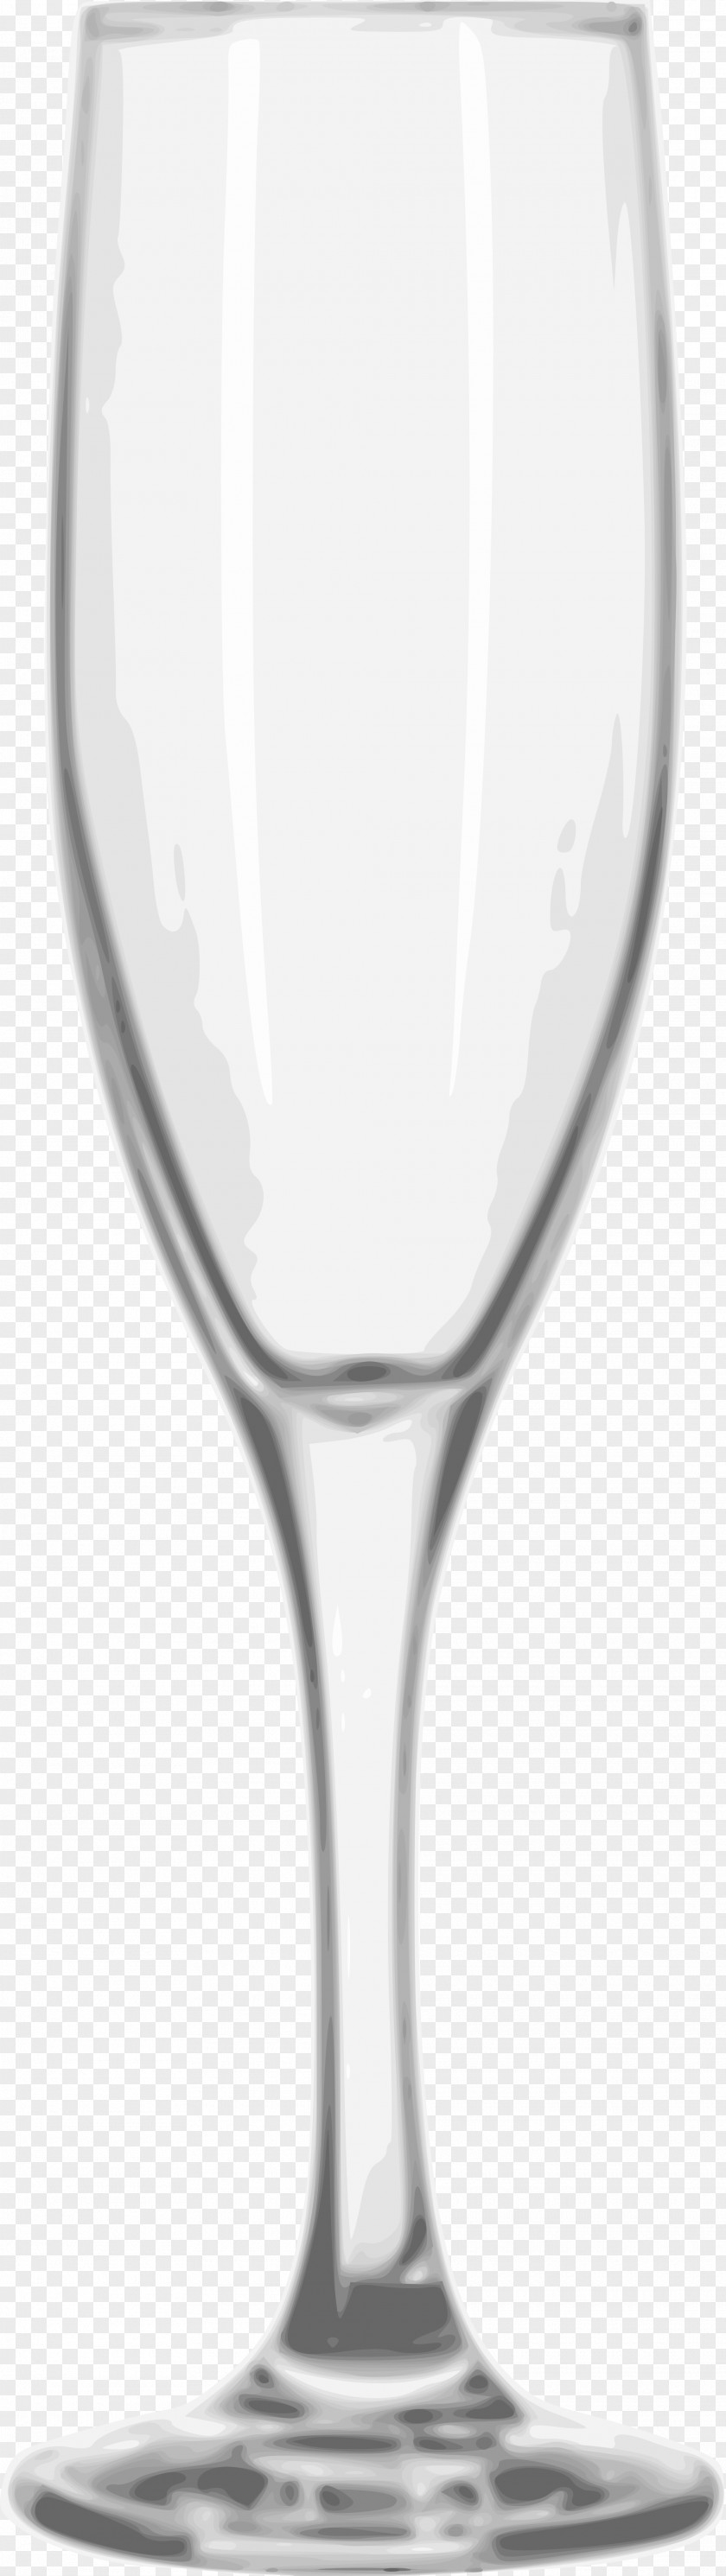 Wineglass Wine Glass Champagne PNG